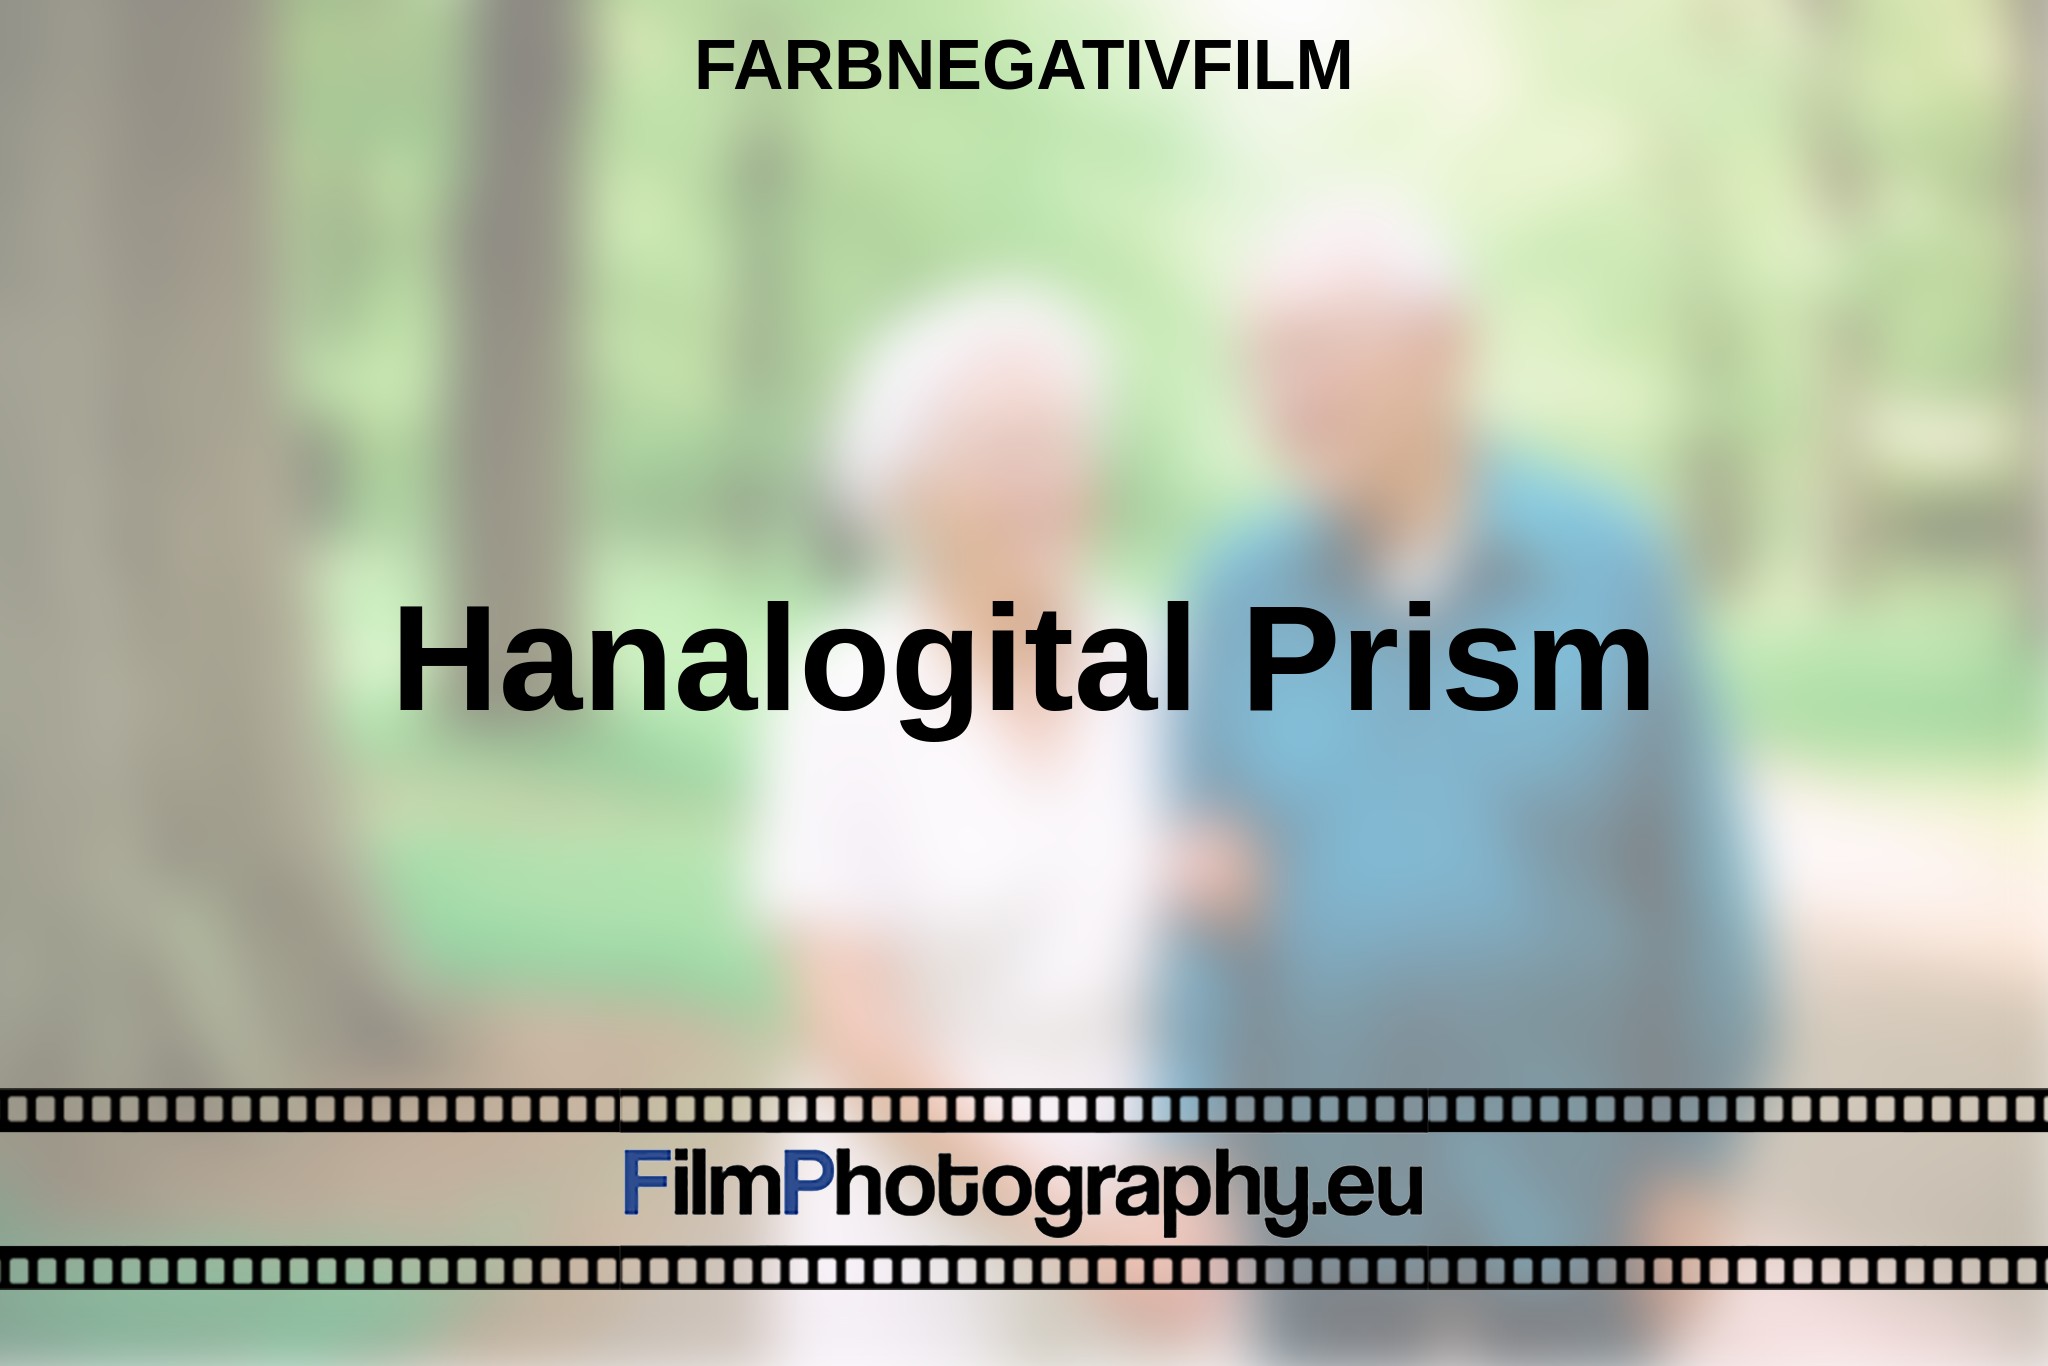 hanalogital-prism-farbnegativfilm-bnv.jpg